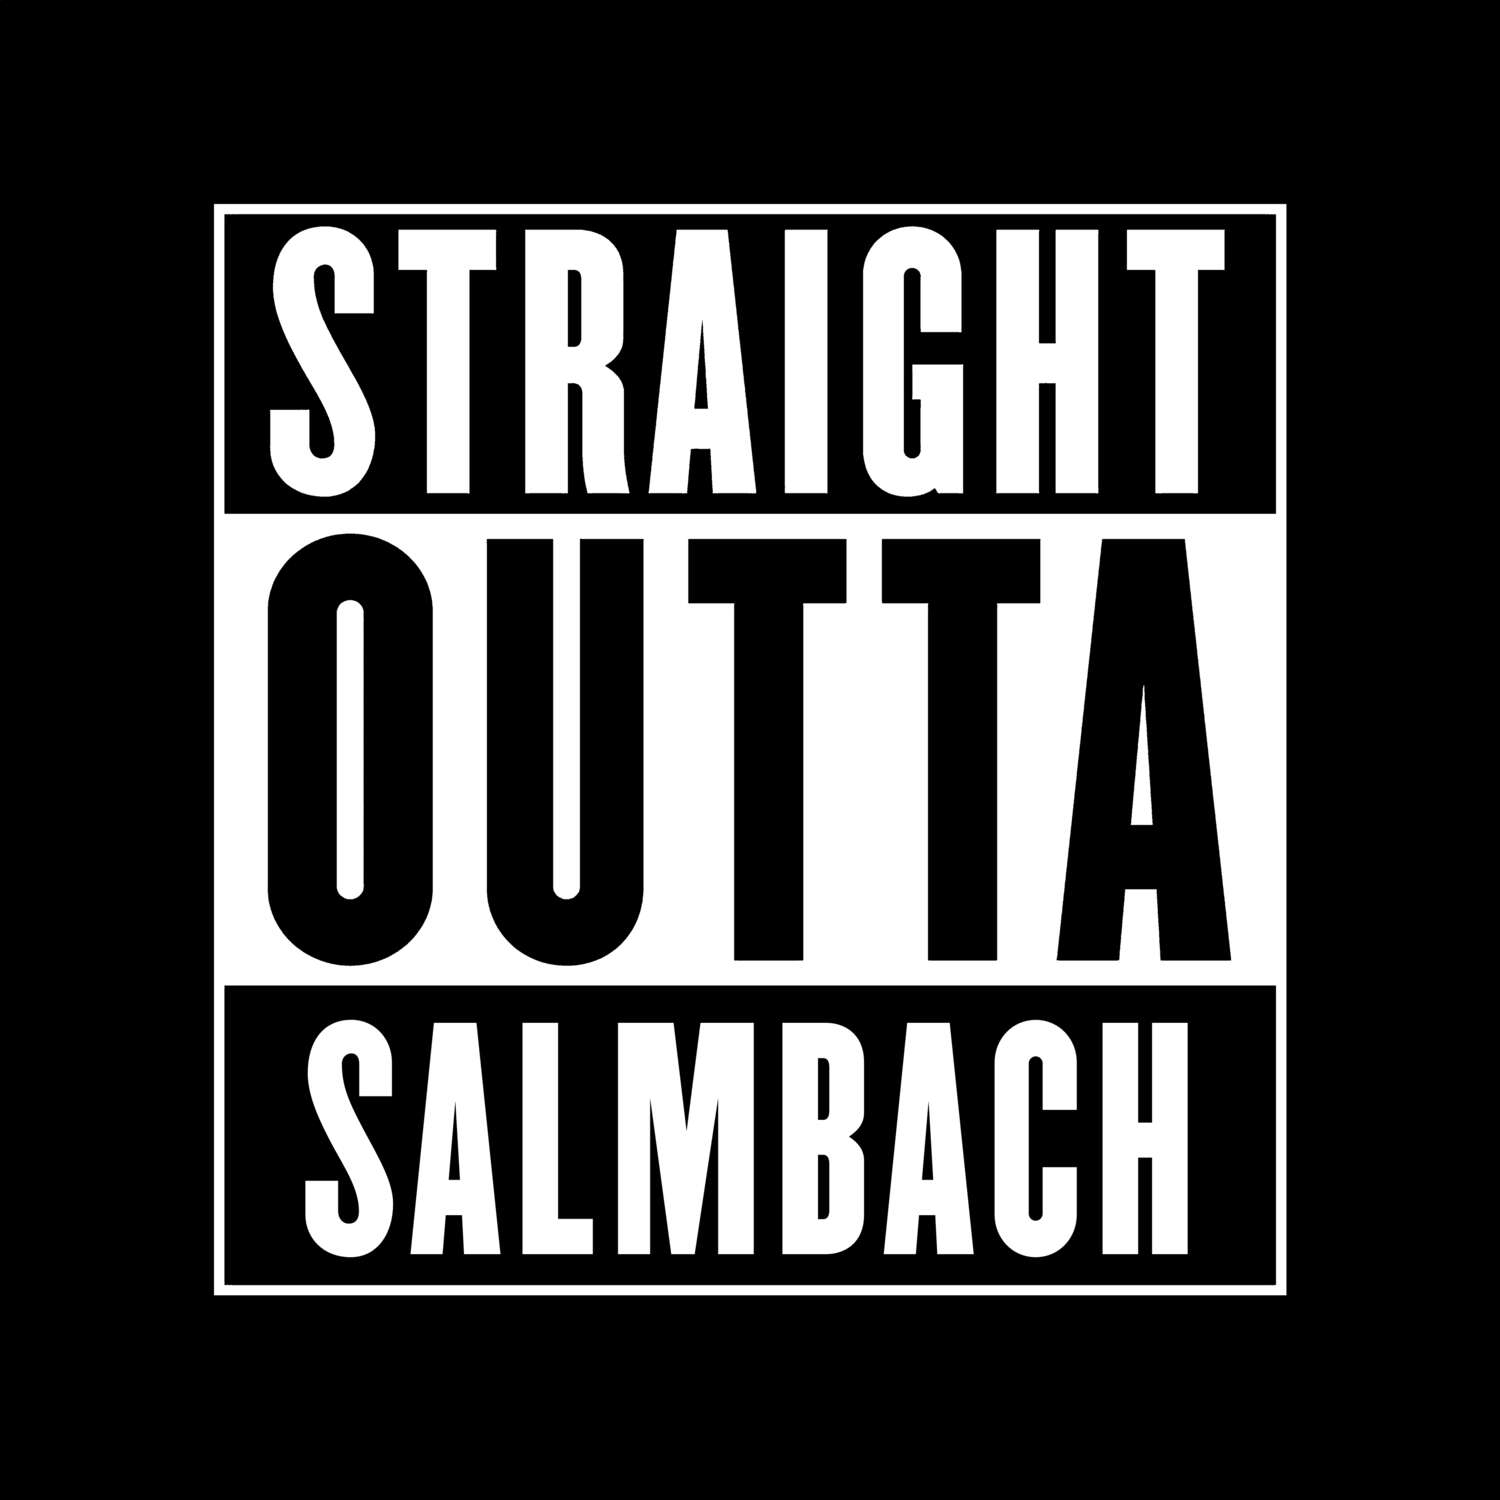 Salmbach T-Shirt »Straight Outta«